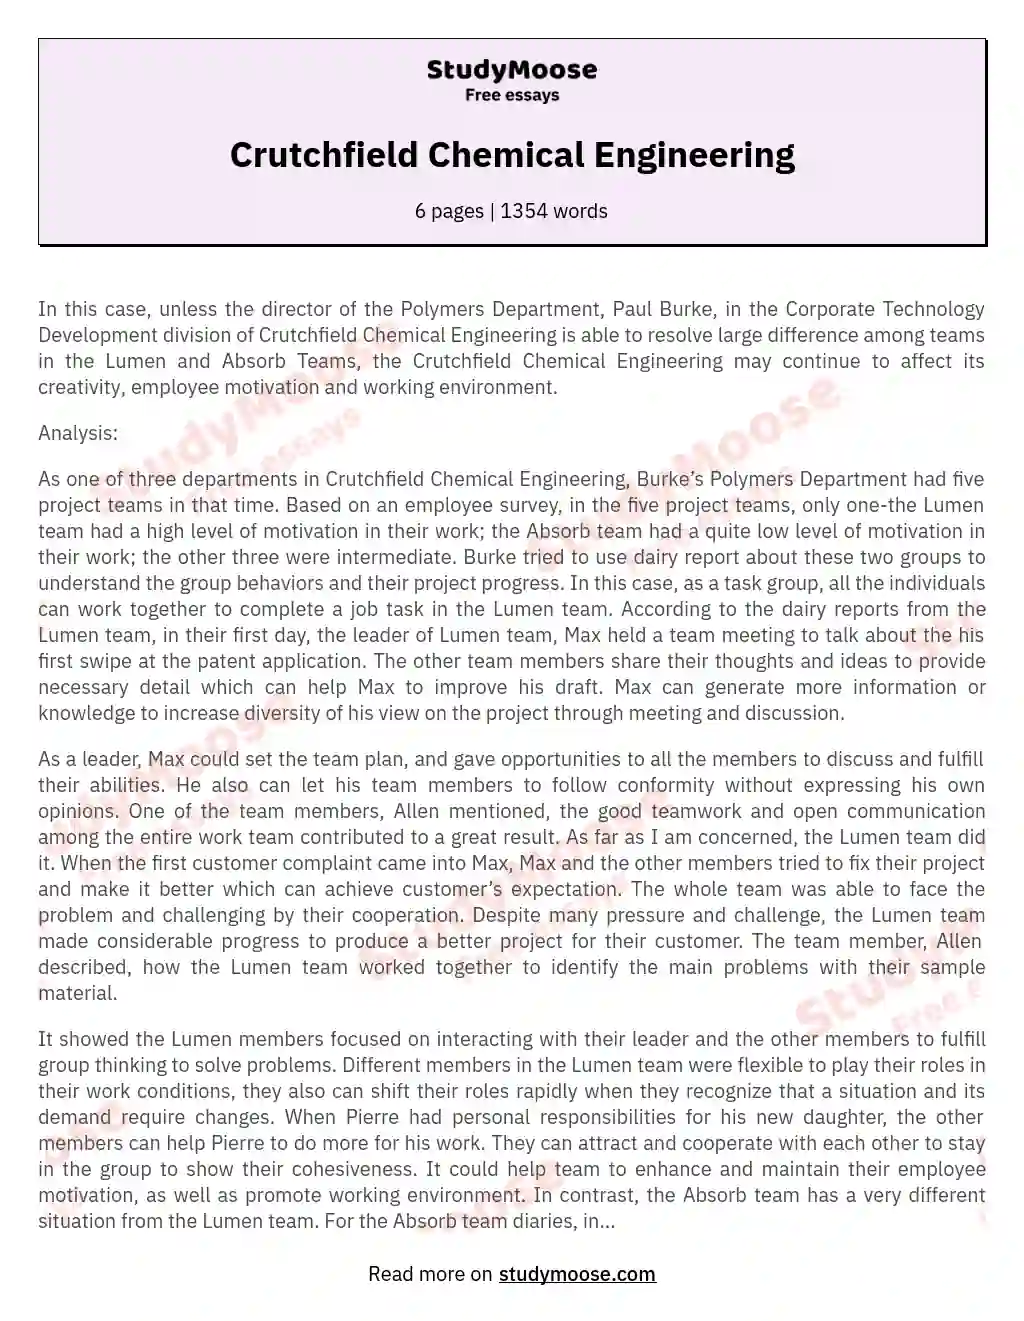 Crutchfield Chemical Engineering essay